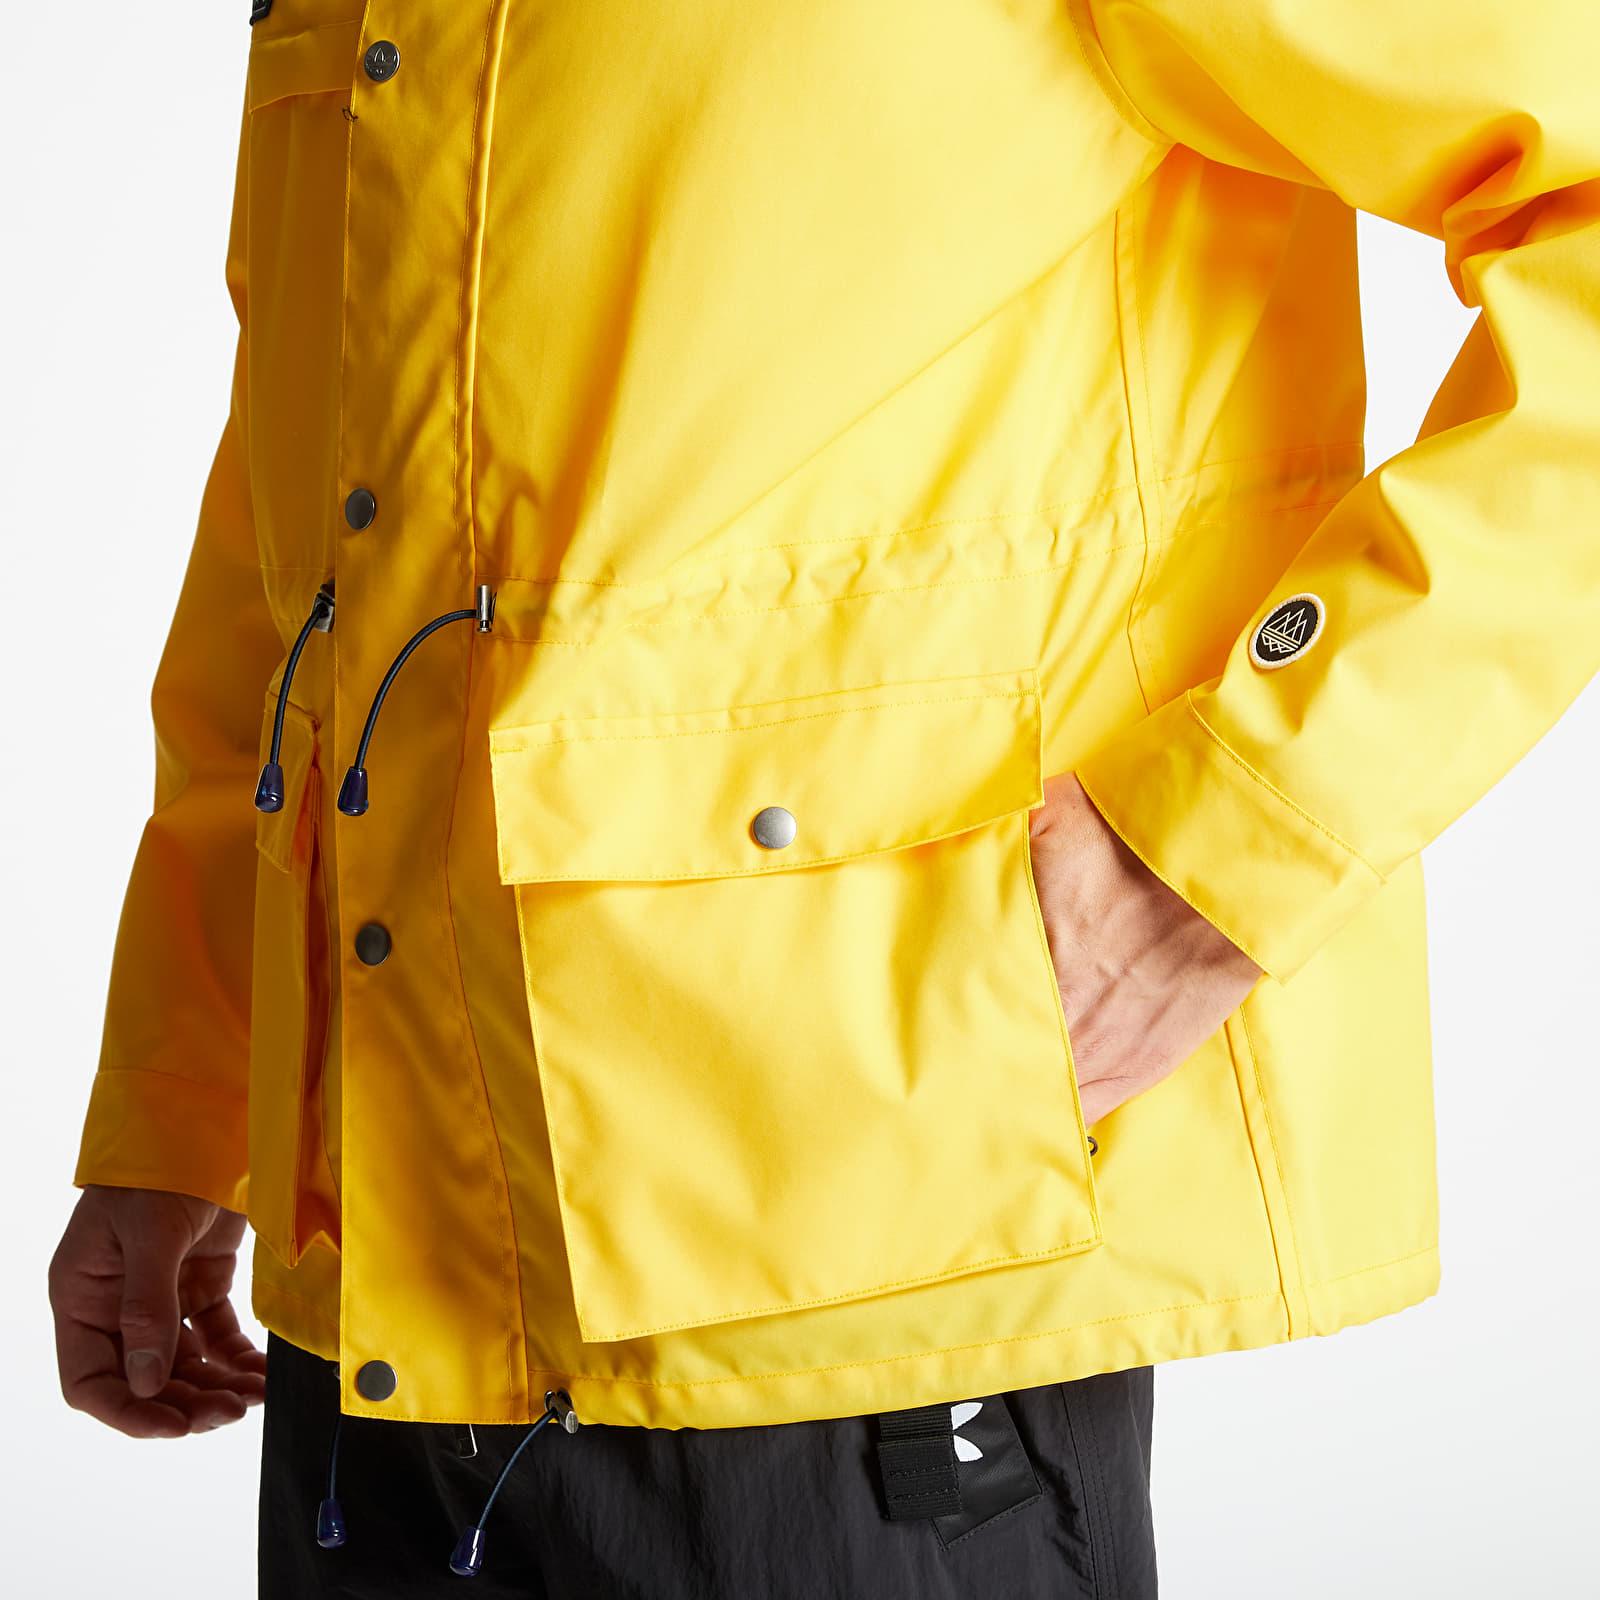 adidas Originals Adidas Spezial Jacket Yellow for Men - Lyst